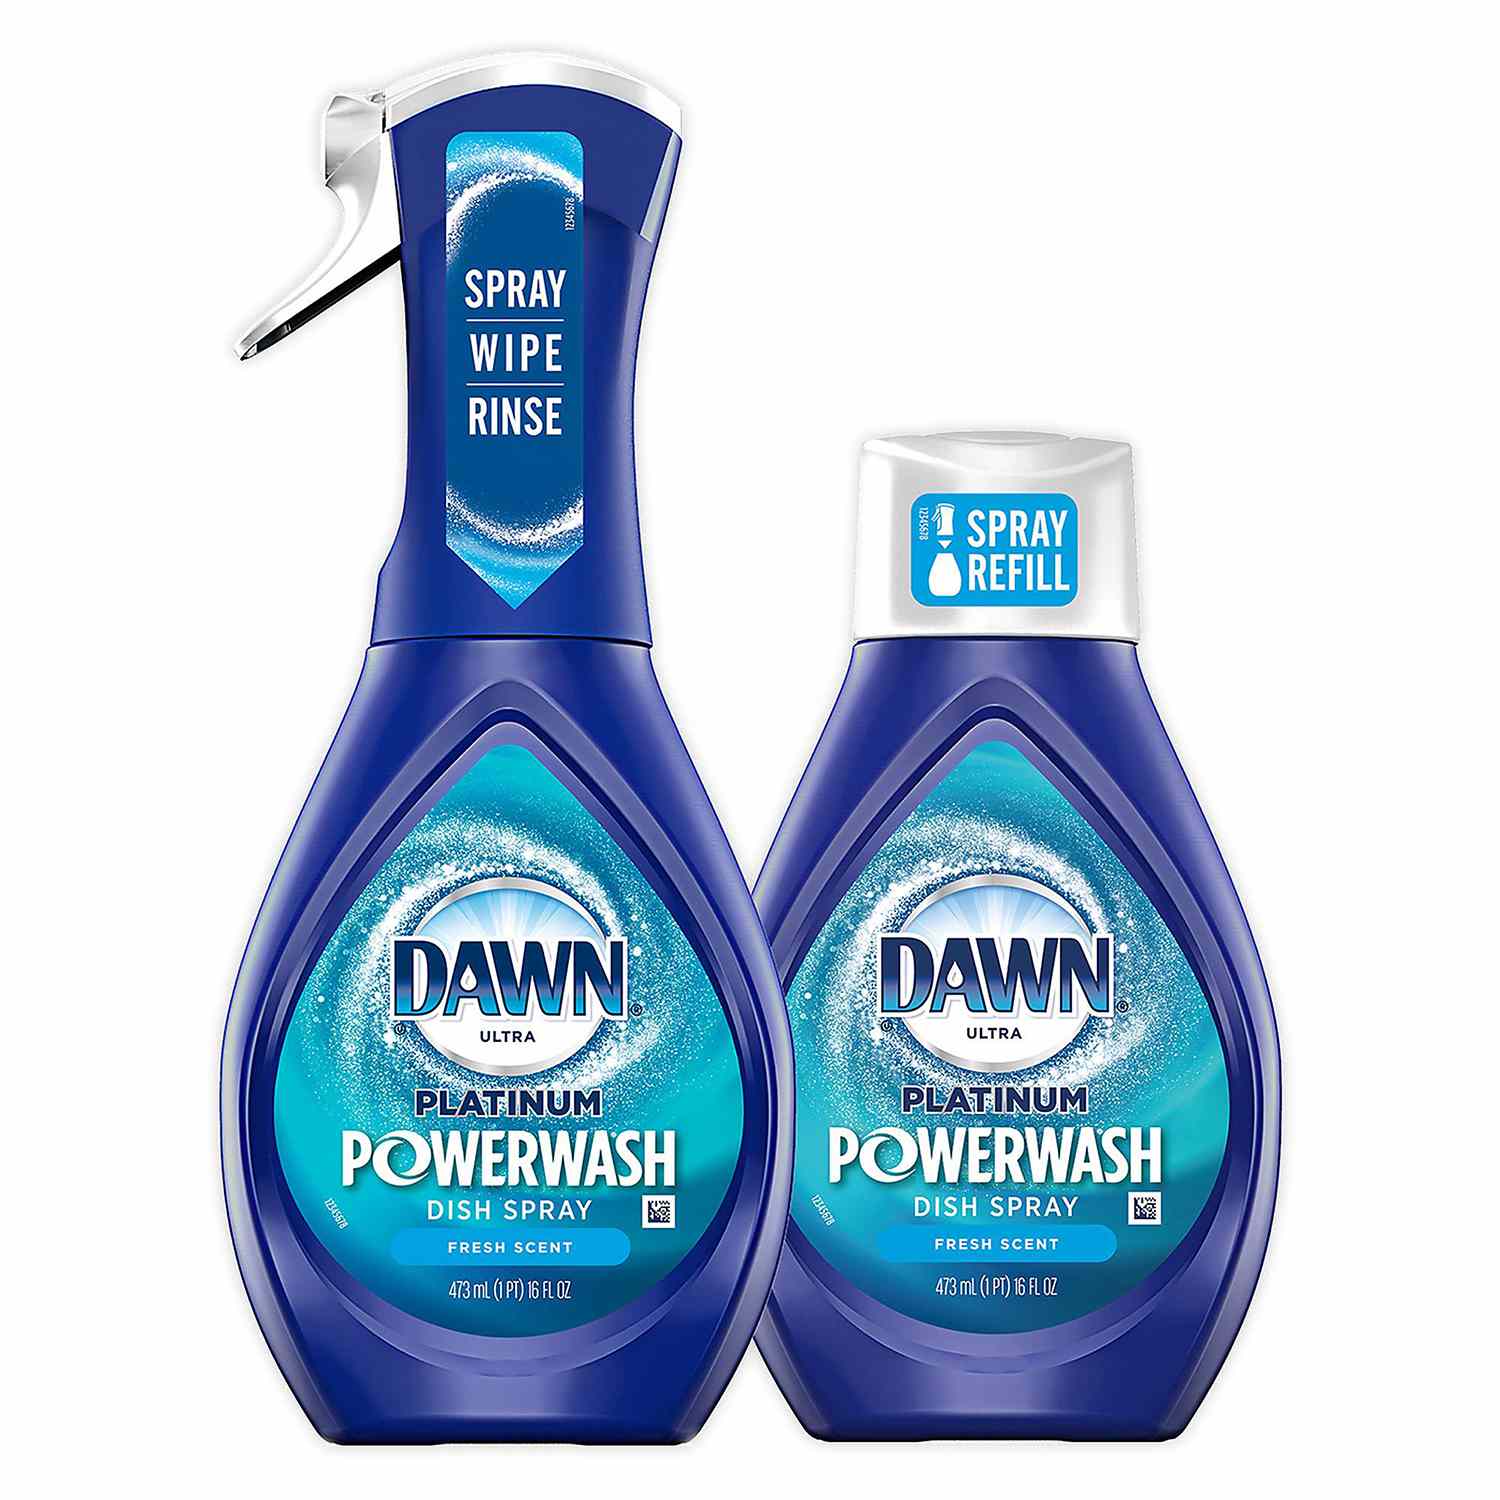 Dawn Ultra Platinum Powerwash Dish Spray Bundle